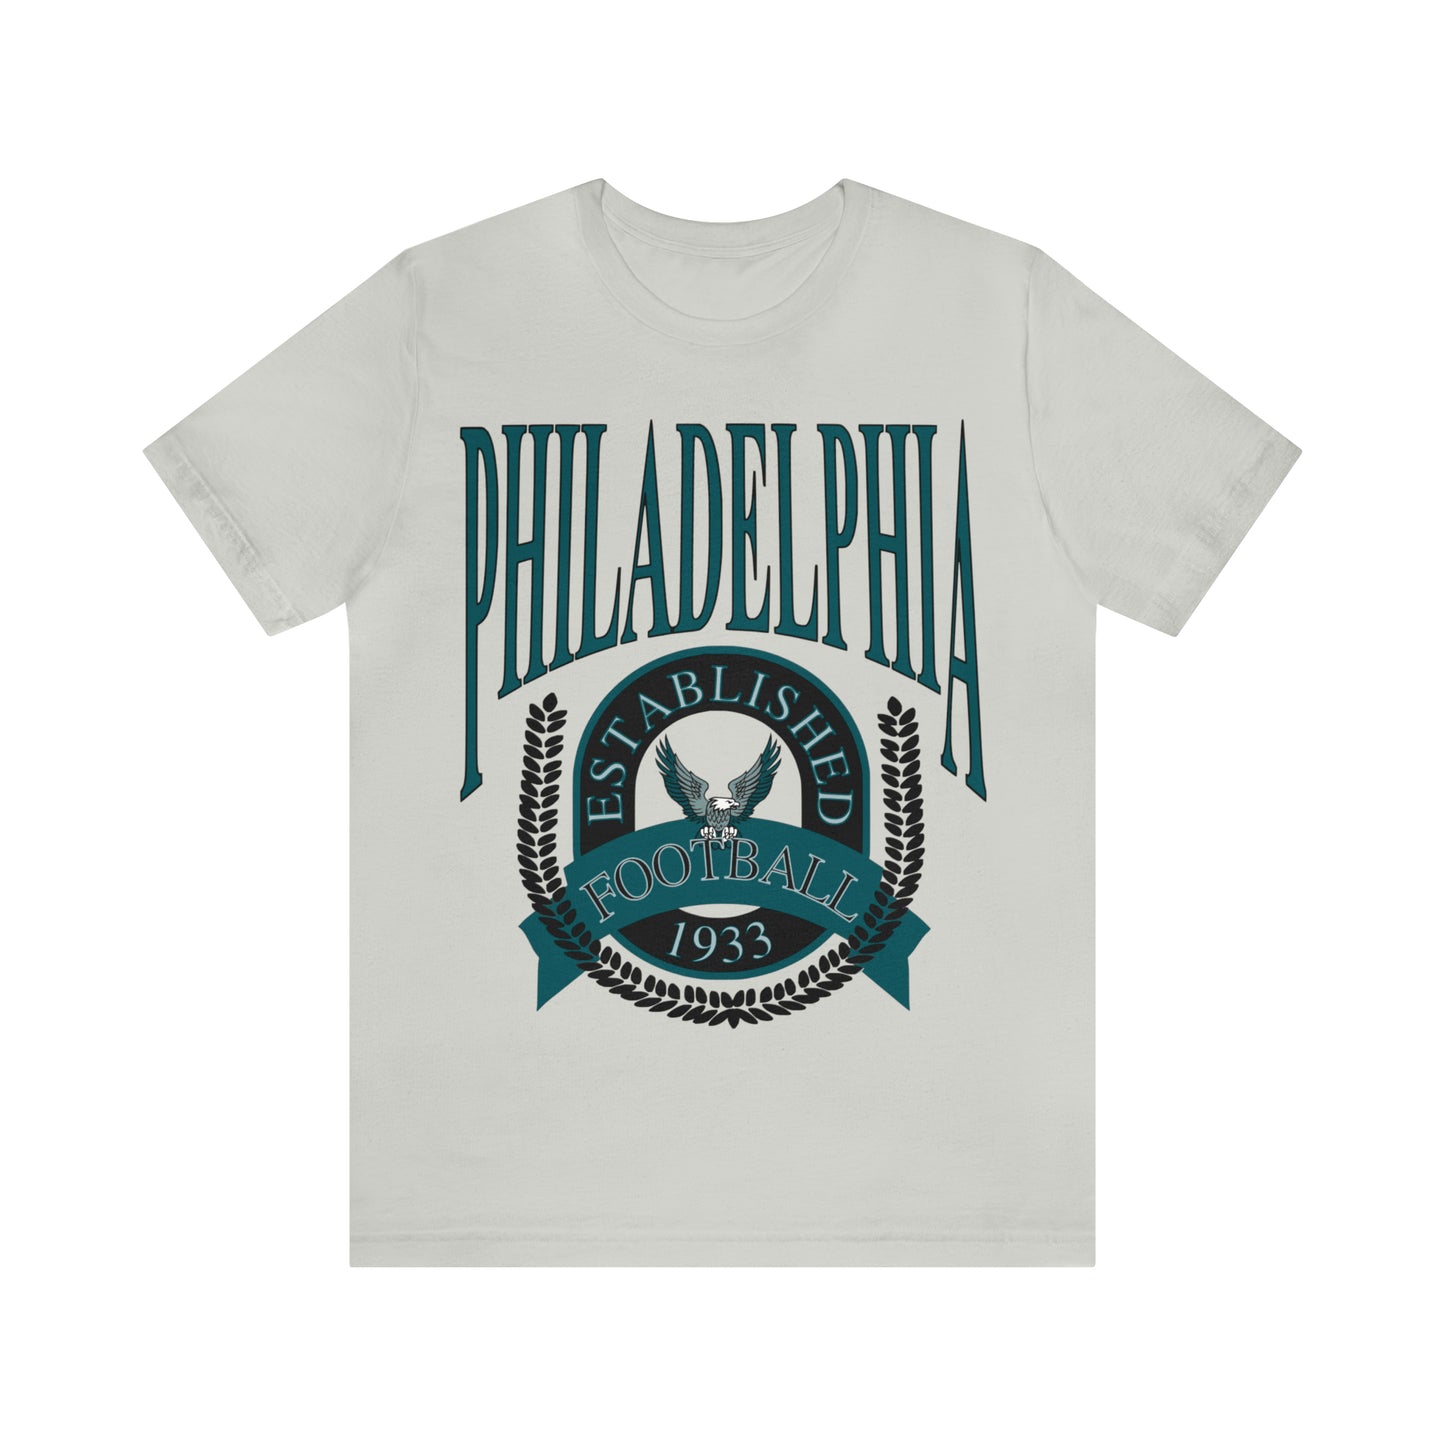 Throwback Vintage Philadelphia Eagles Tee - 90's Short Sleeve T-Shirt - NFL Football Men's & Women's Apparel - Design 1